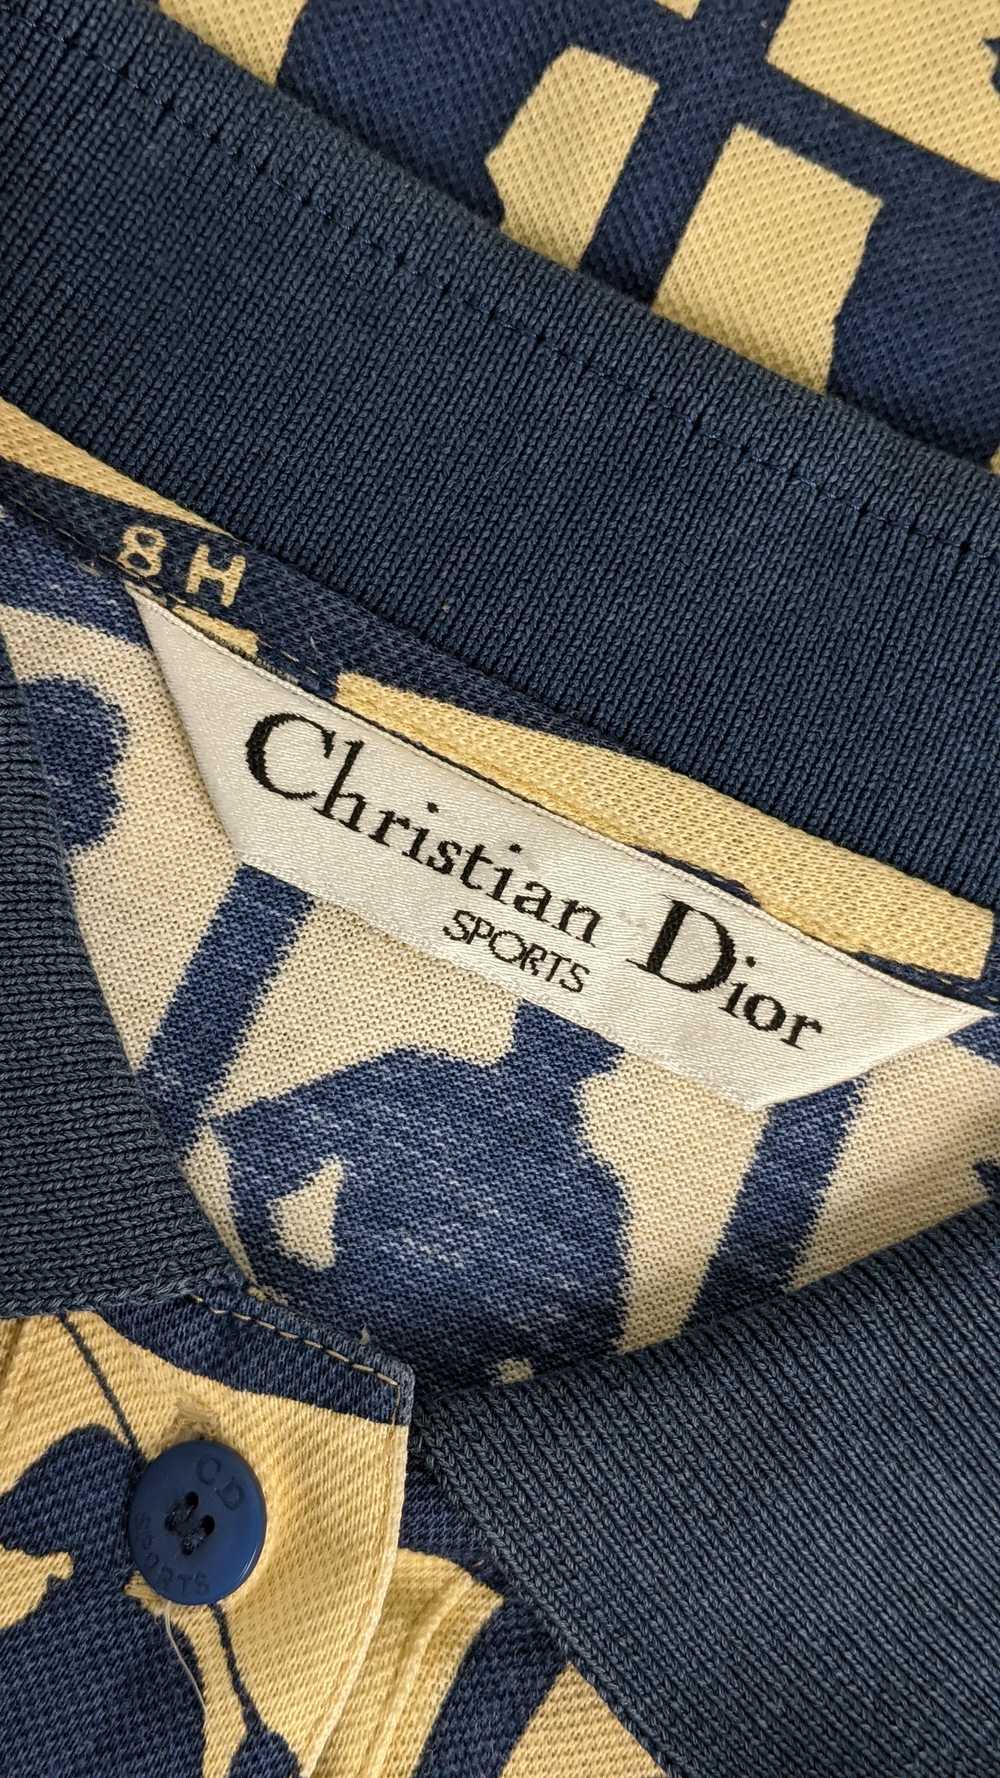 Christian Dior Monsieur - Christian Dior Sports G… - image 4